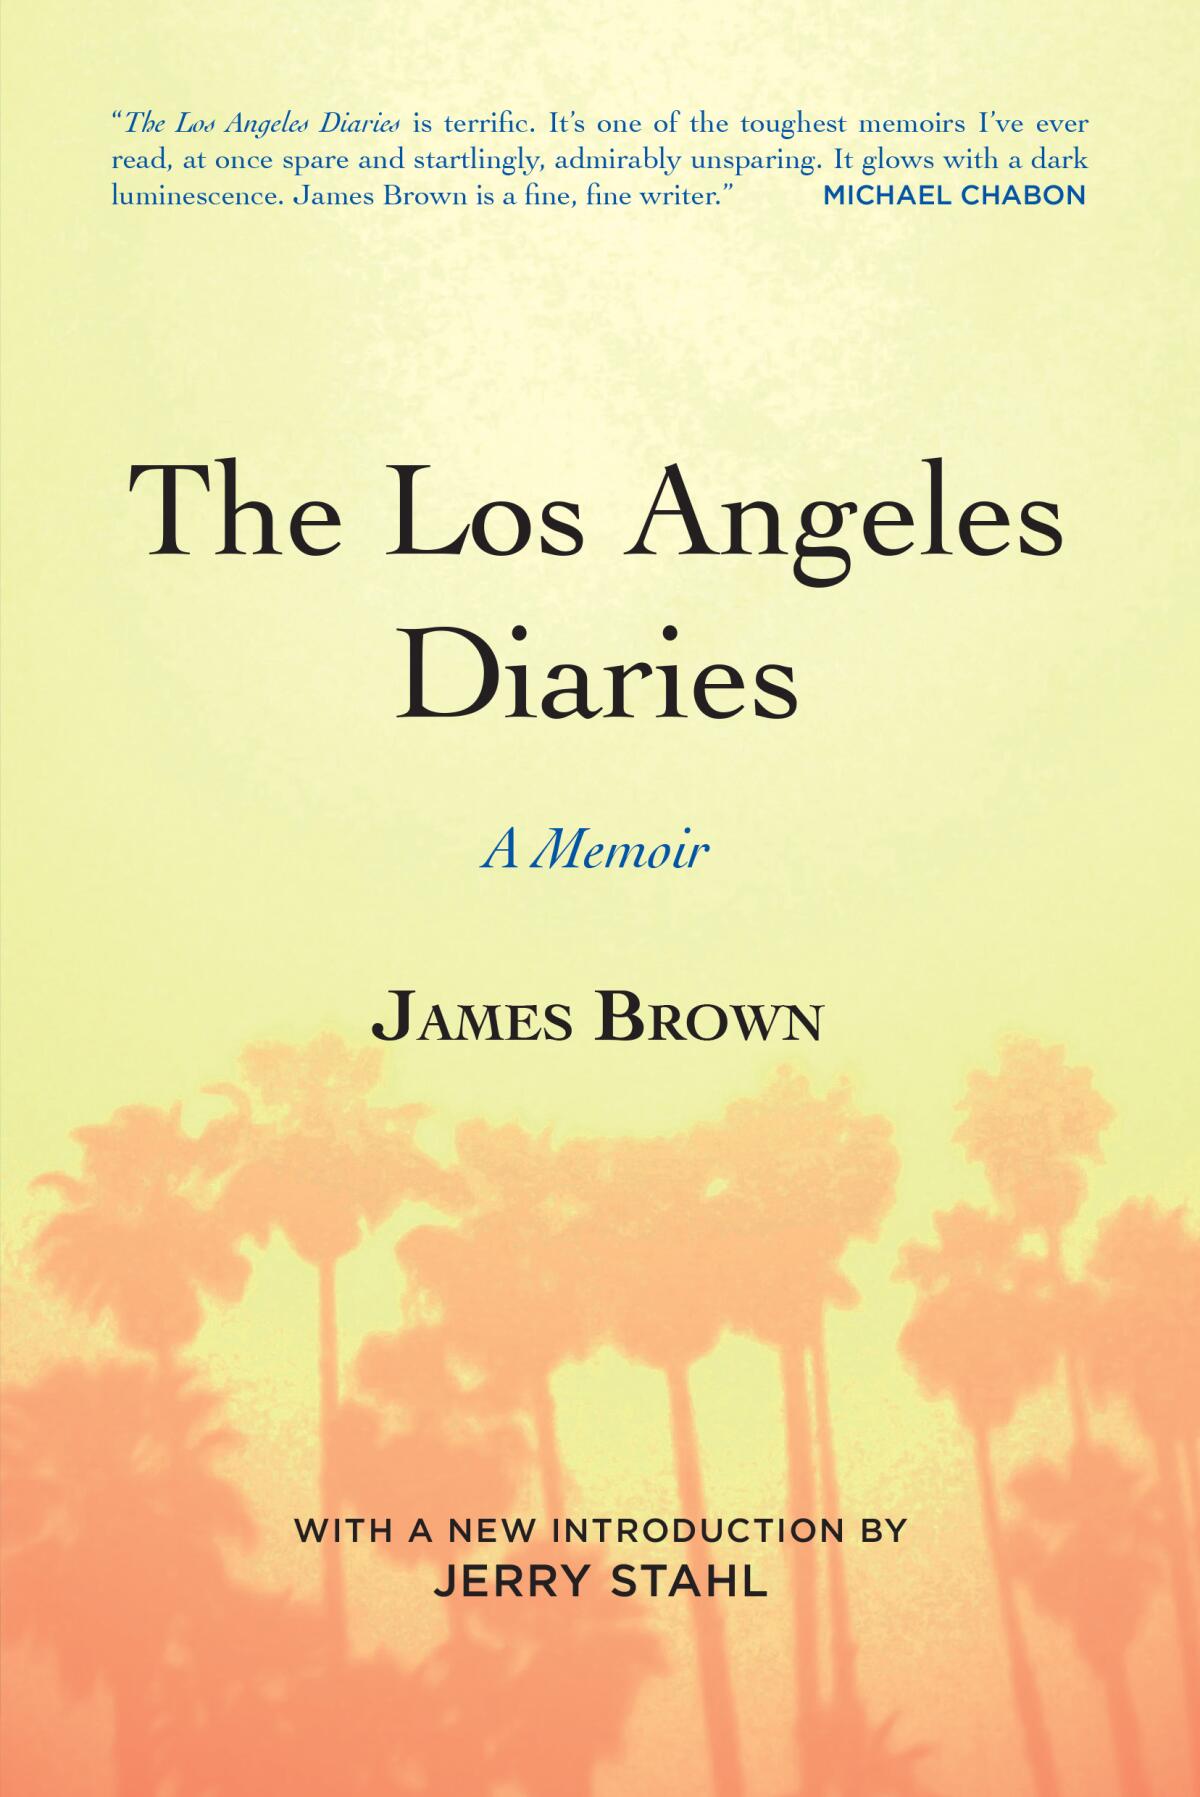 "The Los Angeles Times Diaries: A Memoir" by James Brown